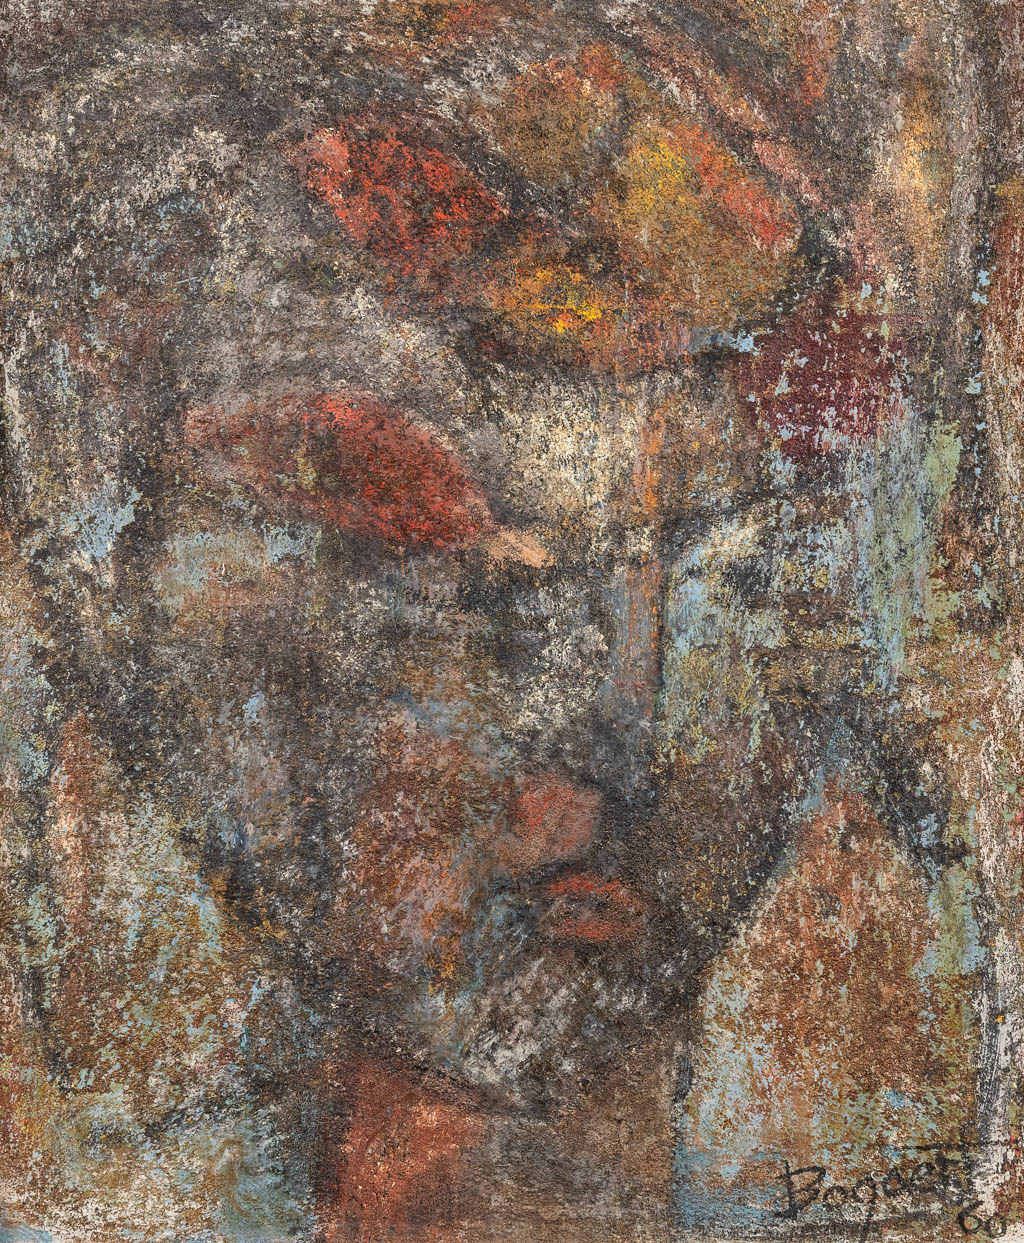  André BOGAERT (1920-1986) 'Abstract figuur' olie op board. 1960. 